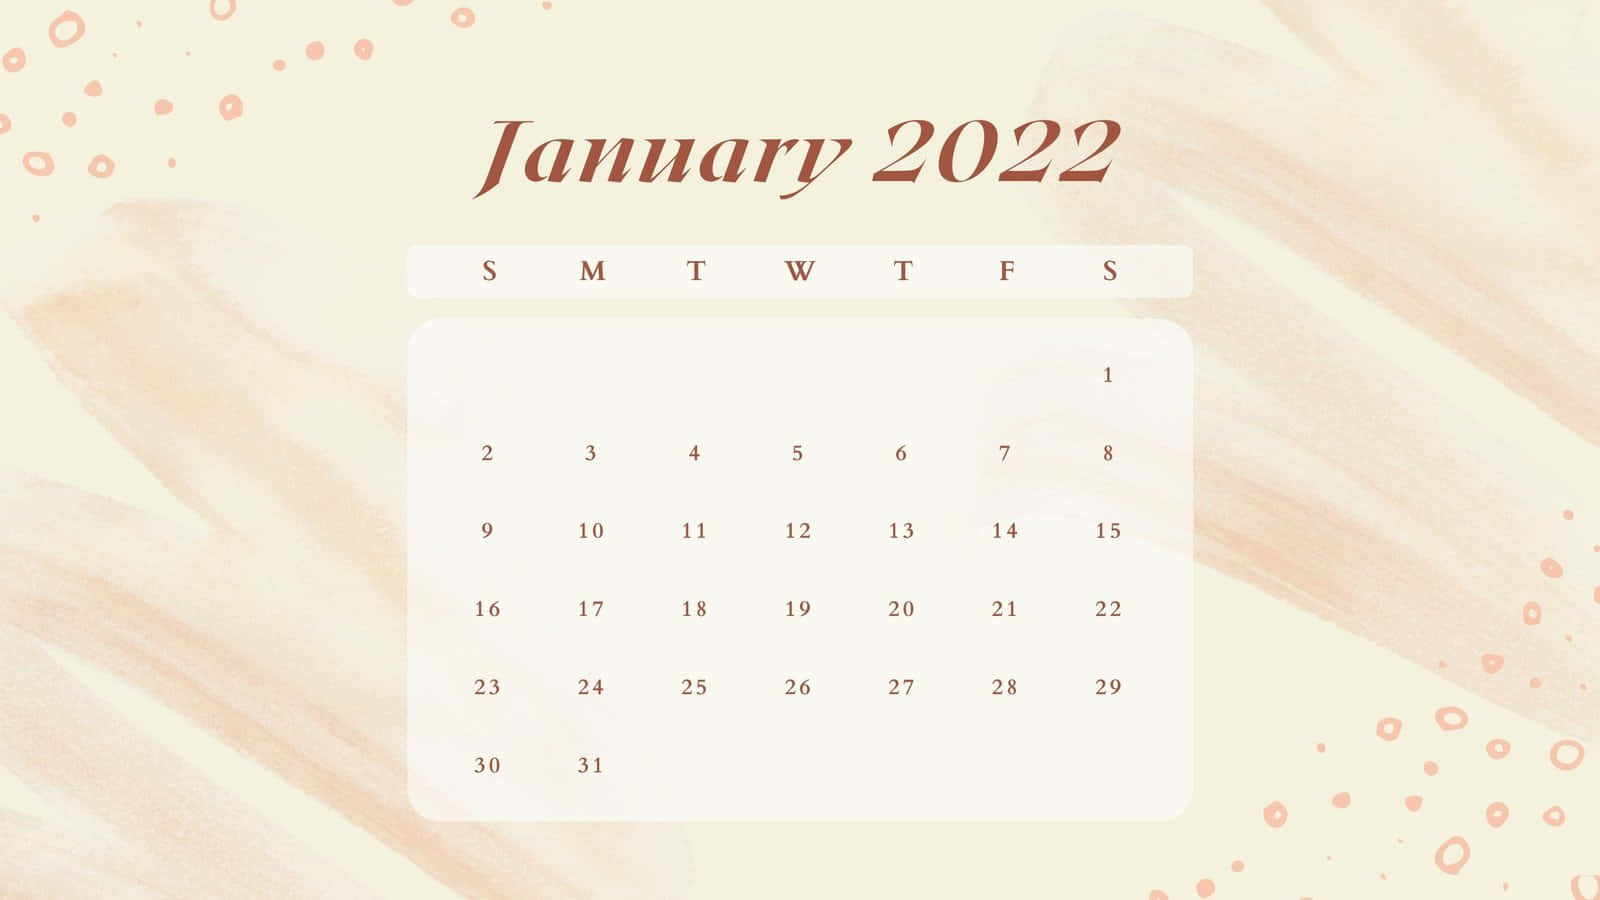 January 2022 Calendar Background with Snowy Landscape